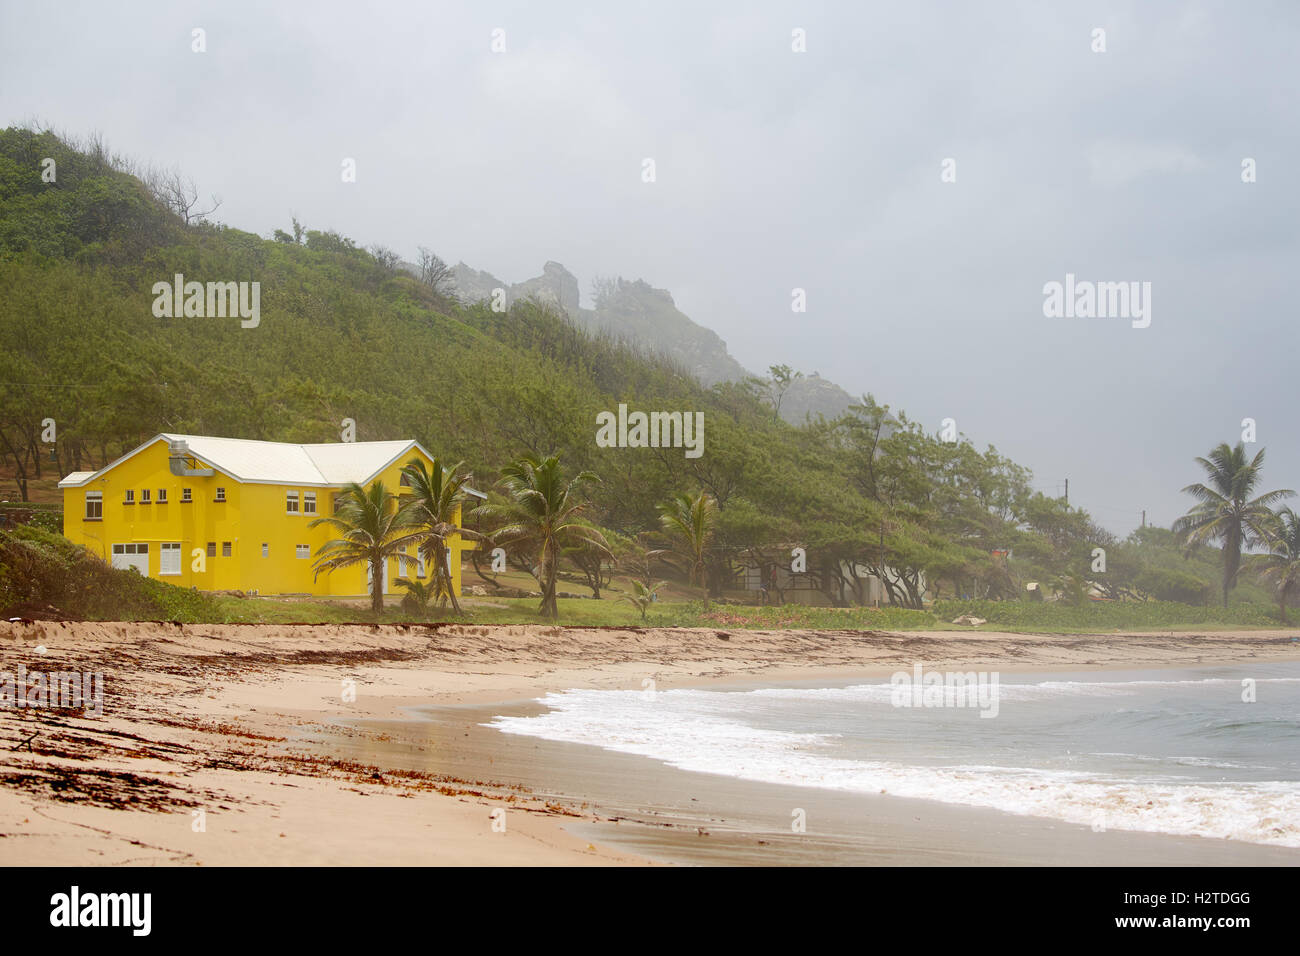 Barbados Atlantikküste Barclays Park Seen gelbe großes Haus Hund Strandwanderer Sand hell Farbe Farbe sa spazieren gehen Stockfoto